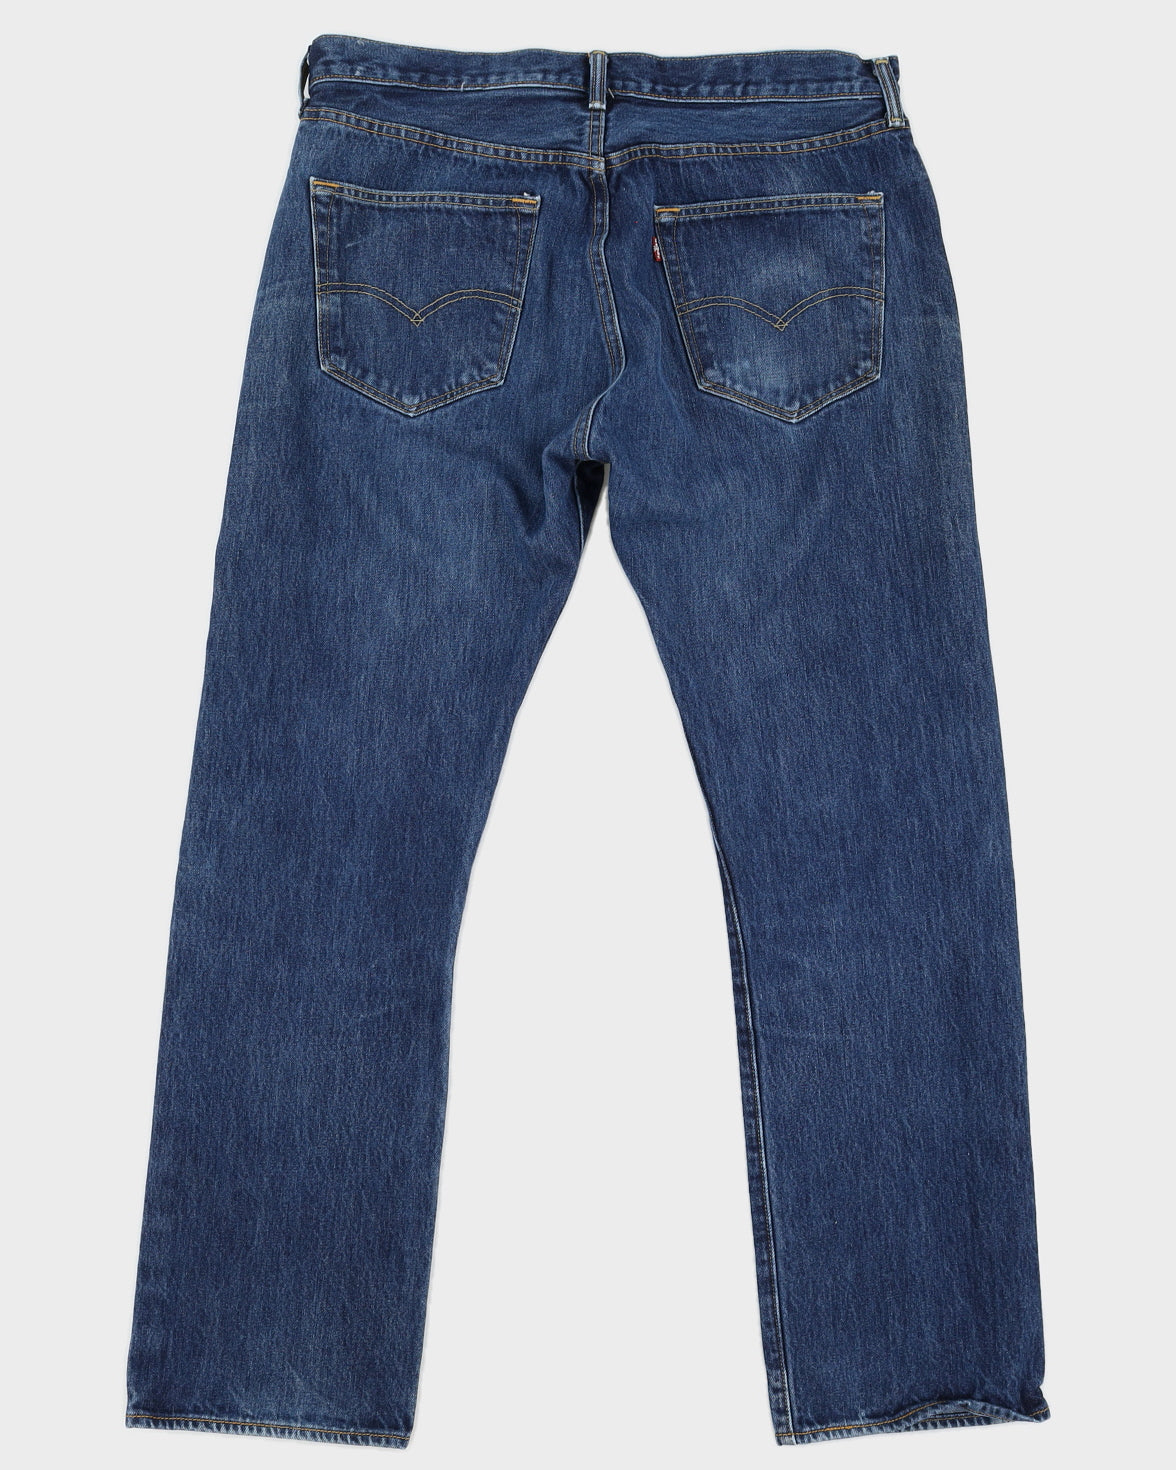 Levi's 501 Blue Medium Washed Jeans - W36 L32